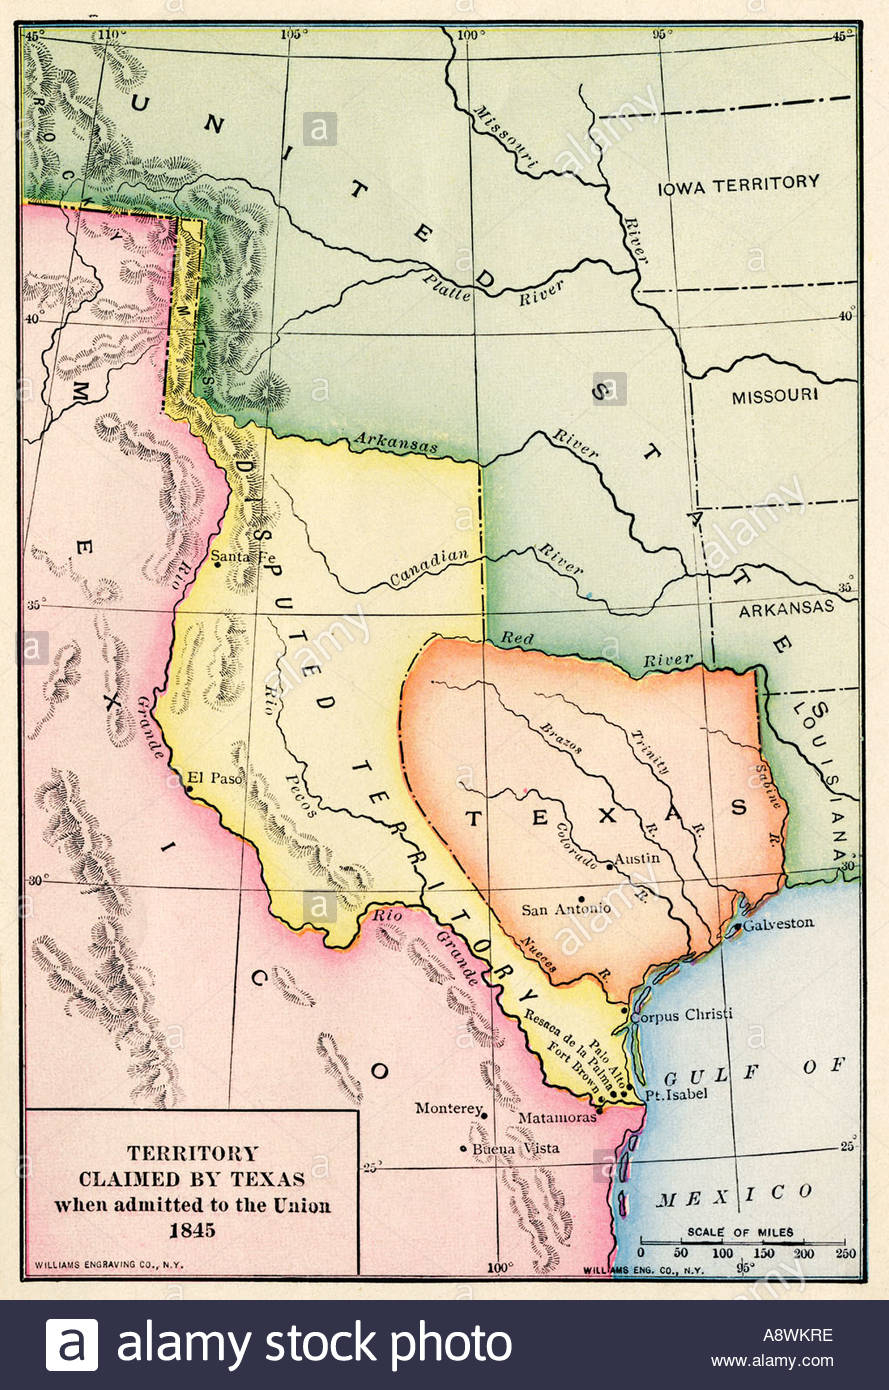 Texas Map Photos &amp;amp; Texas Map Images - Alamy - Republic Of Texas Map Overlay